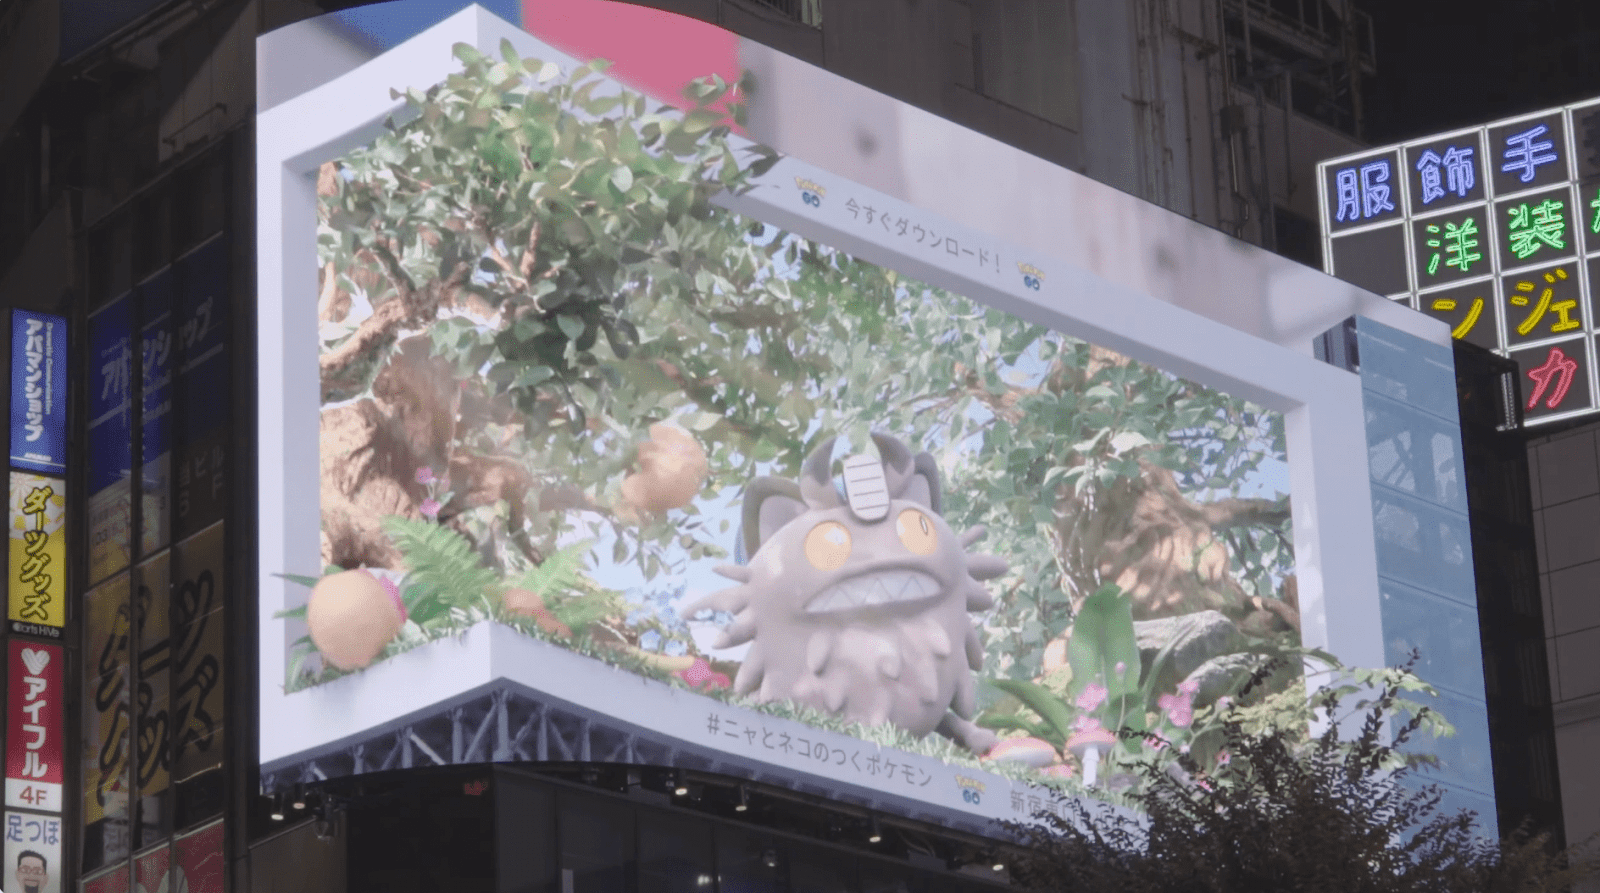 Pokemon Go CGI powered advertisement